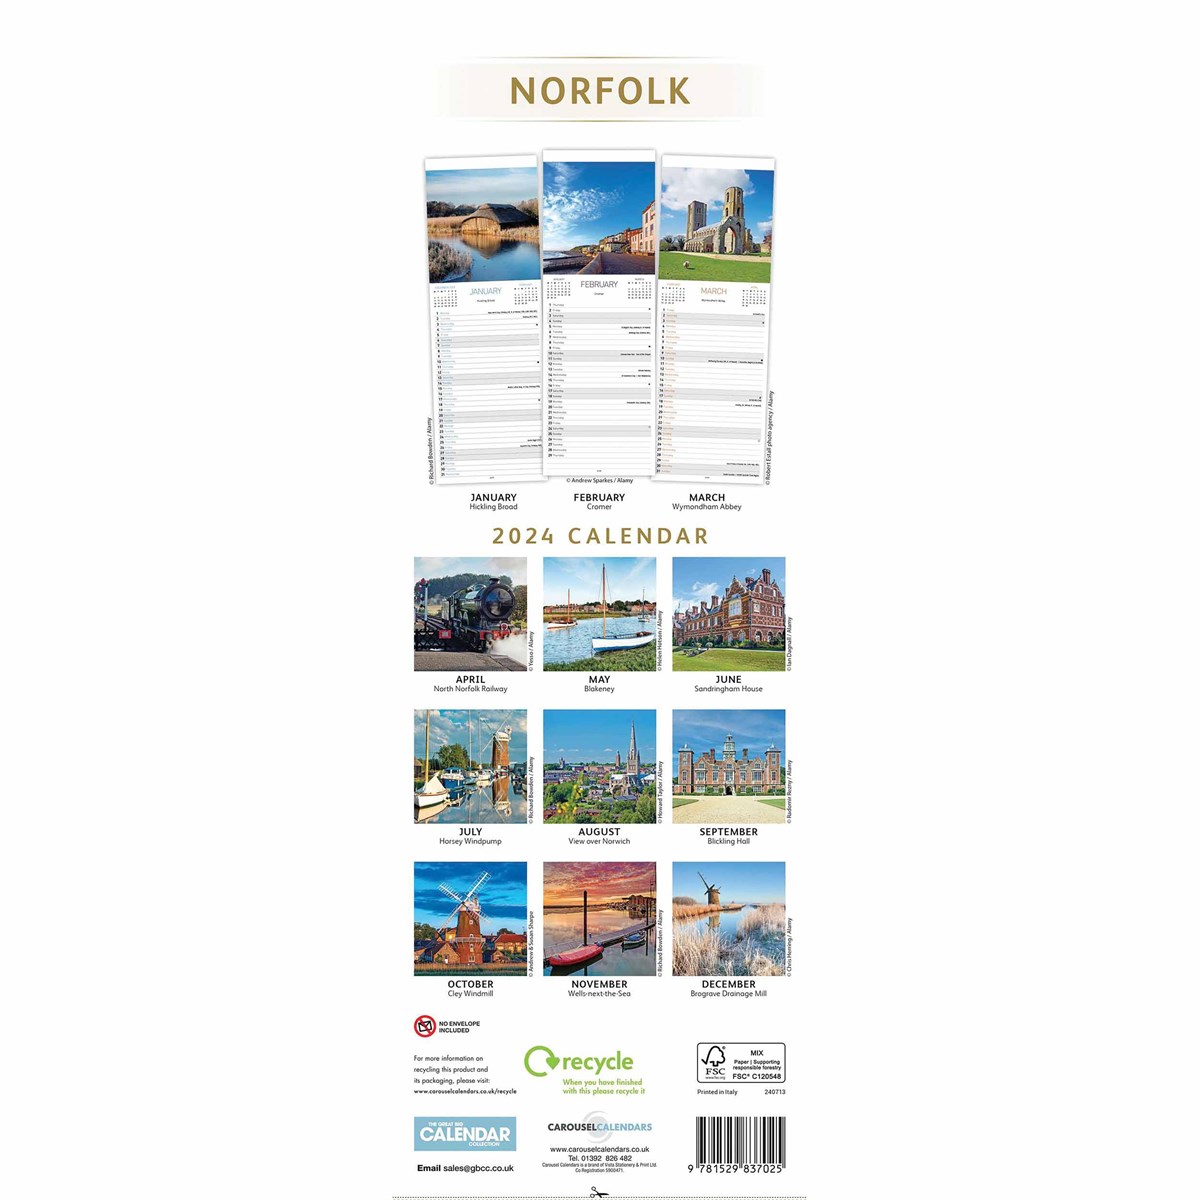 Norfolk Slim Calendar 2024 by Carousel Calendars 240713